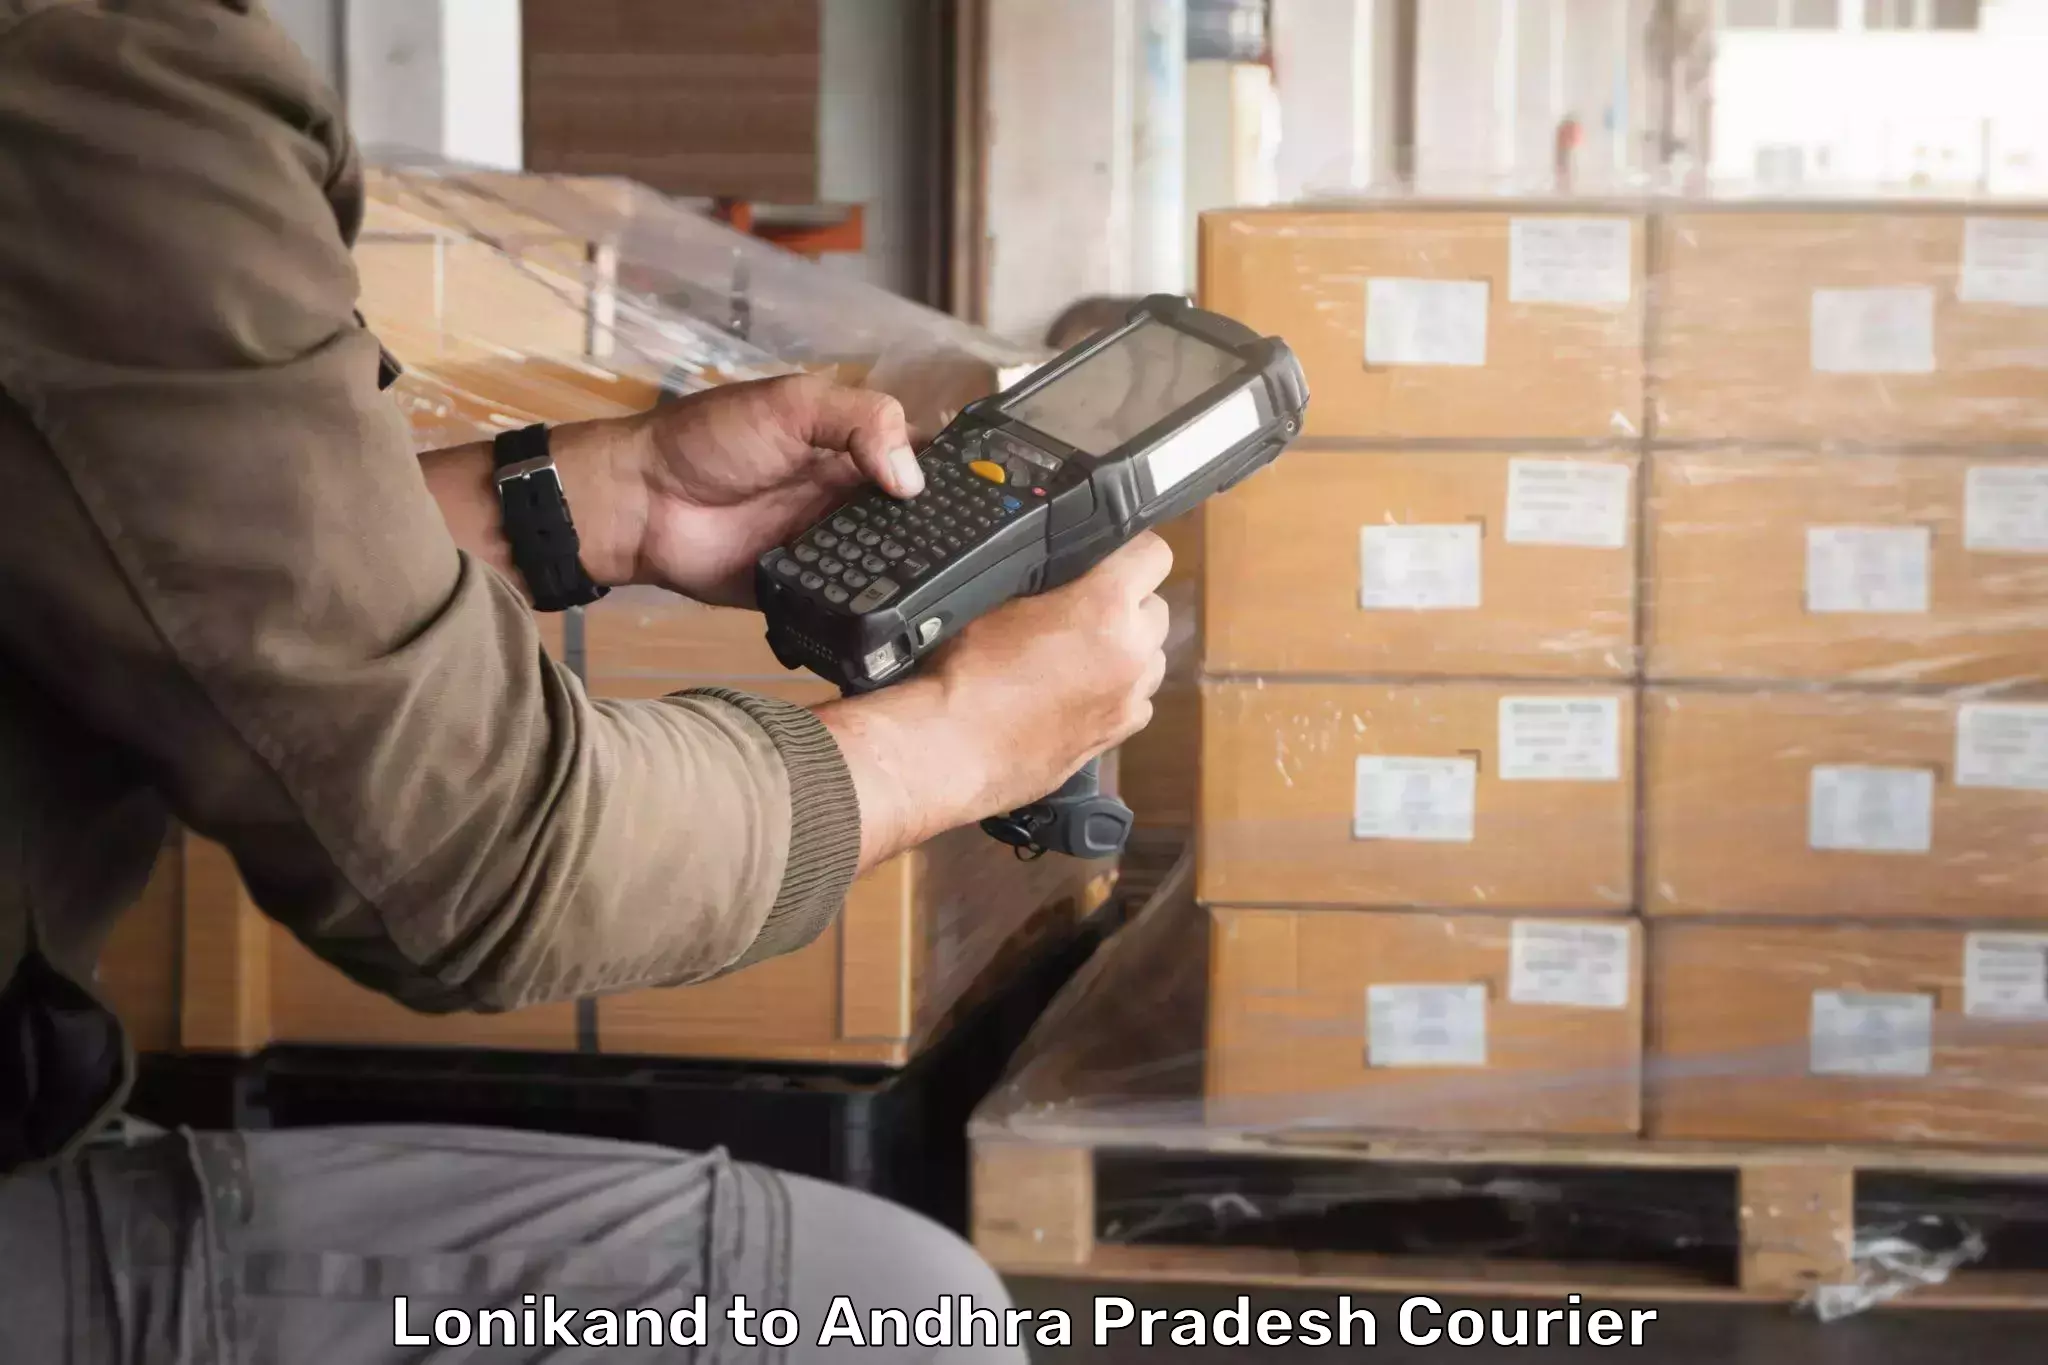 Speedy delivery service Lonikand to Visakhapatnam Port